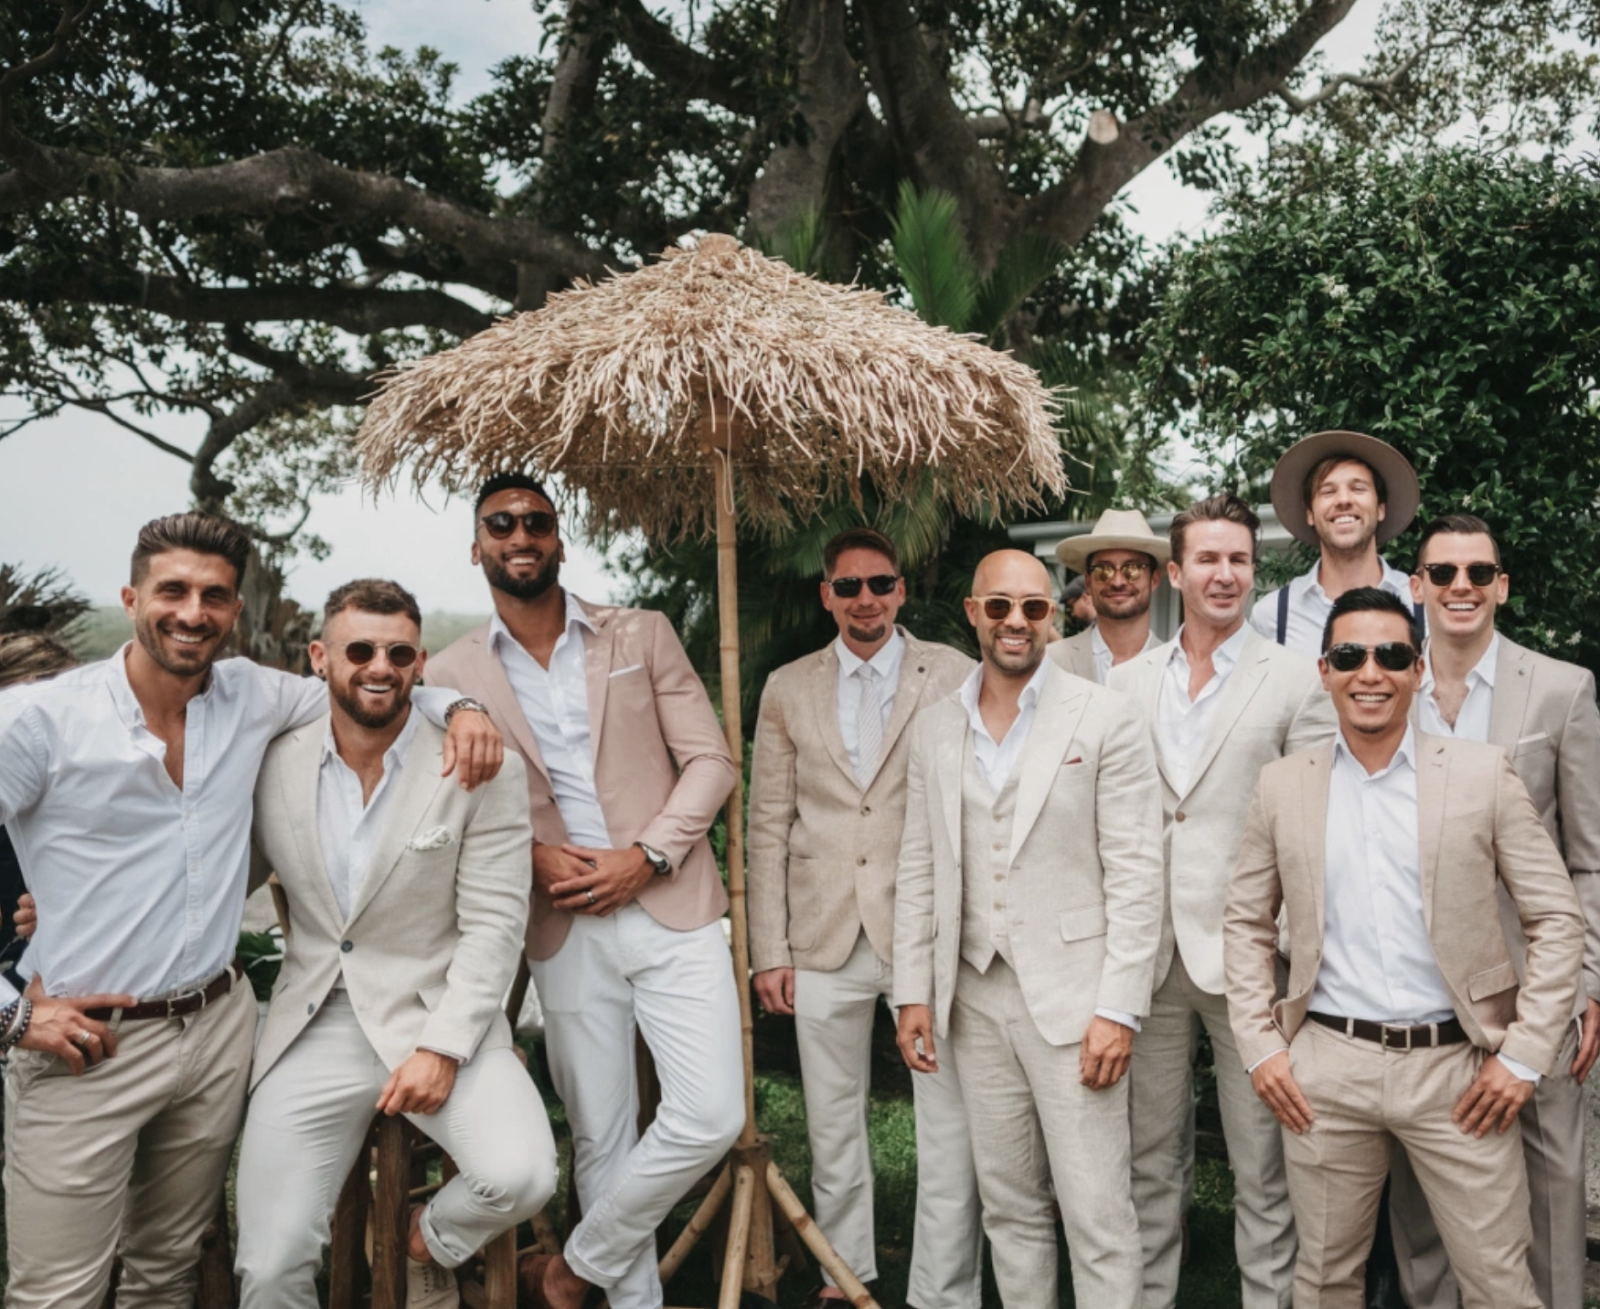 Beach formal wedding attire for men